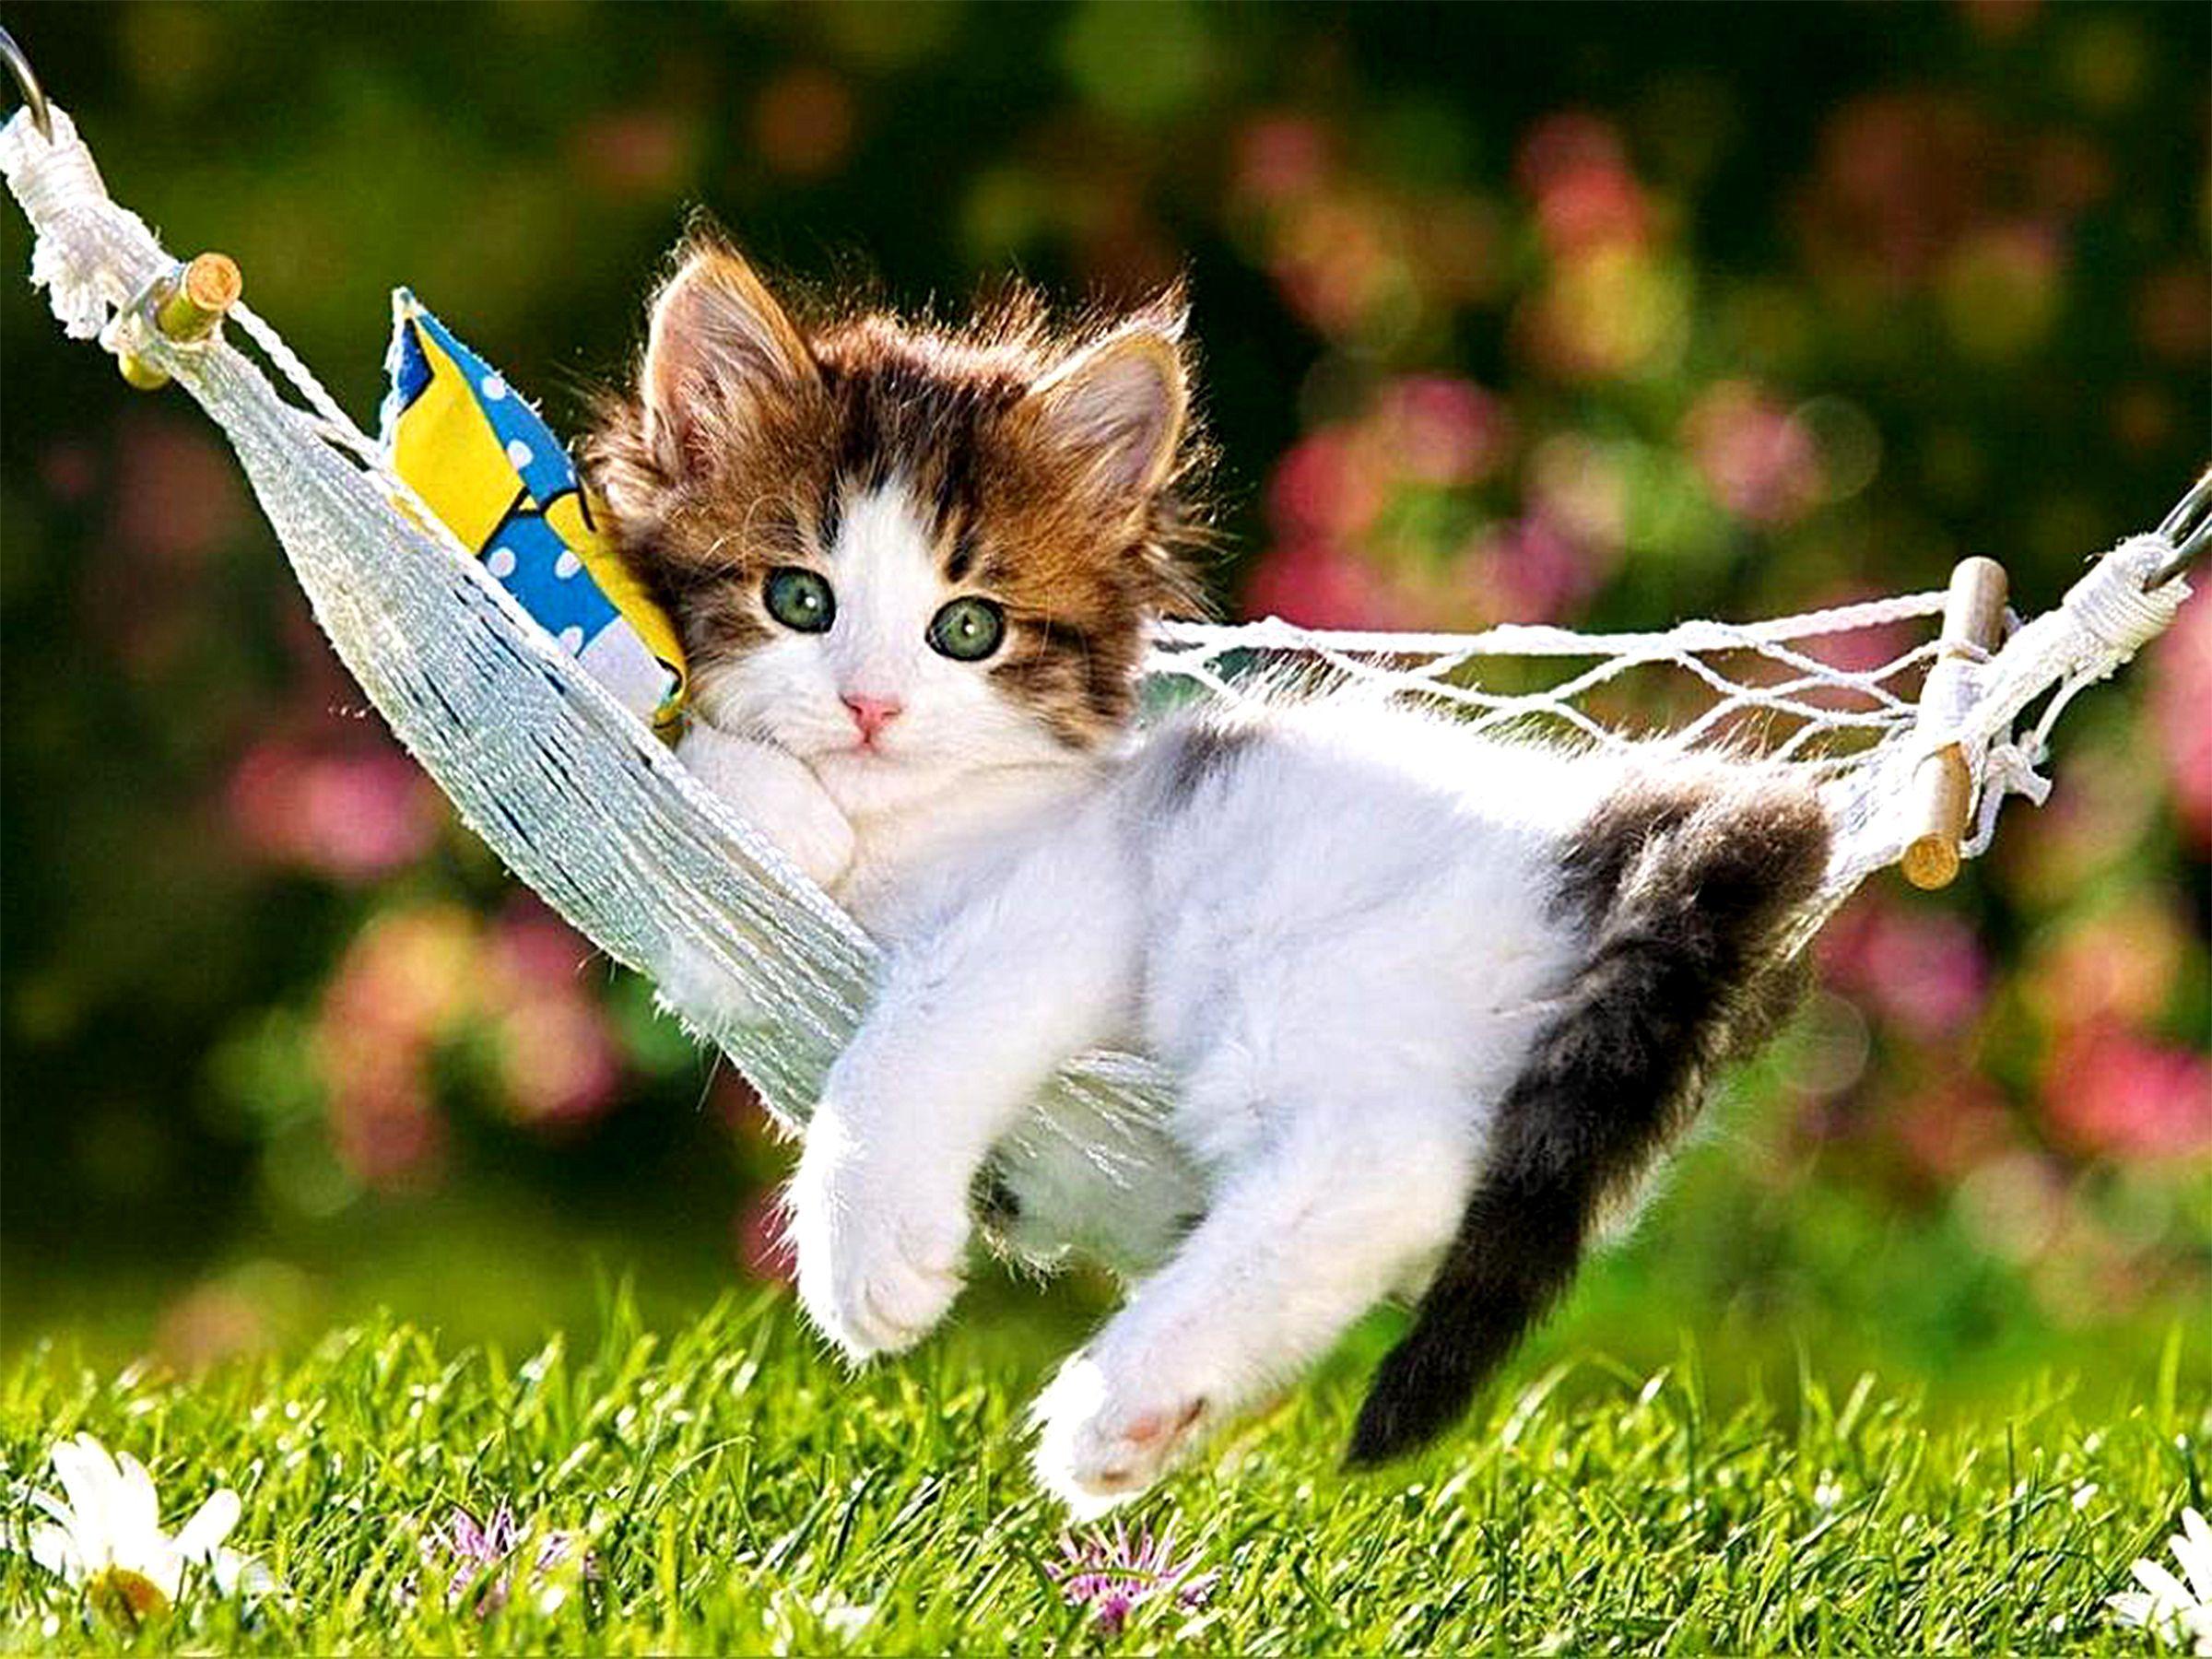 Wallpaper.wiki Beautiful Creative Cute Cat Kitty Kitten With Flowers